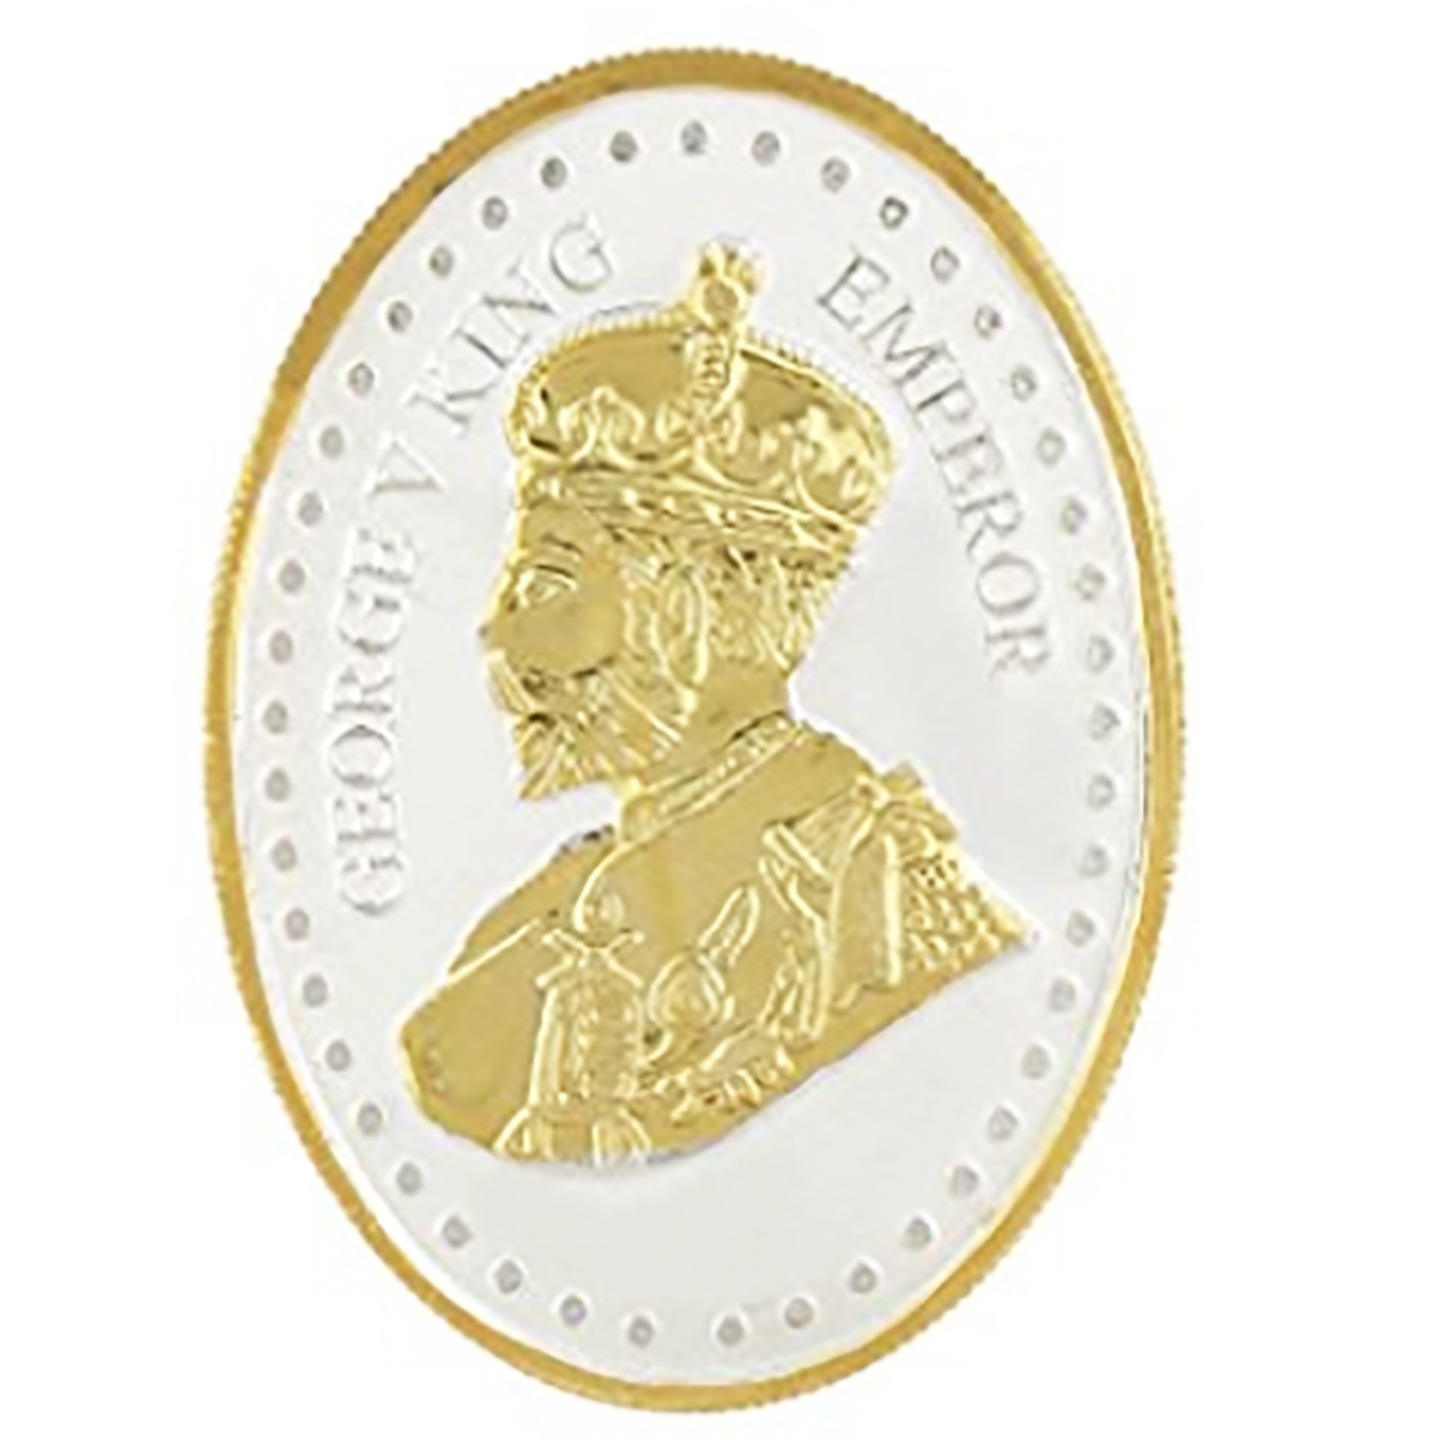 Silver Coin George King V Emperor 24 Kt Gold Plated 100 Gm 999 BIS Hallmarked